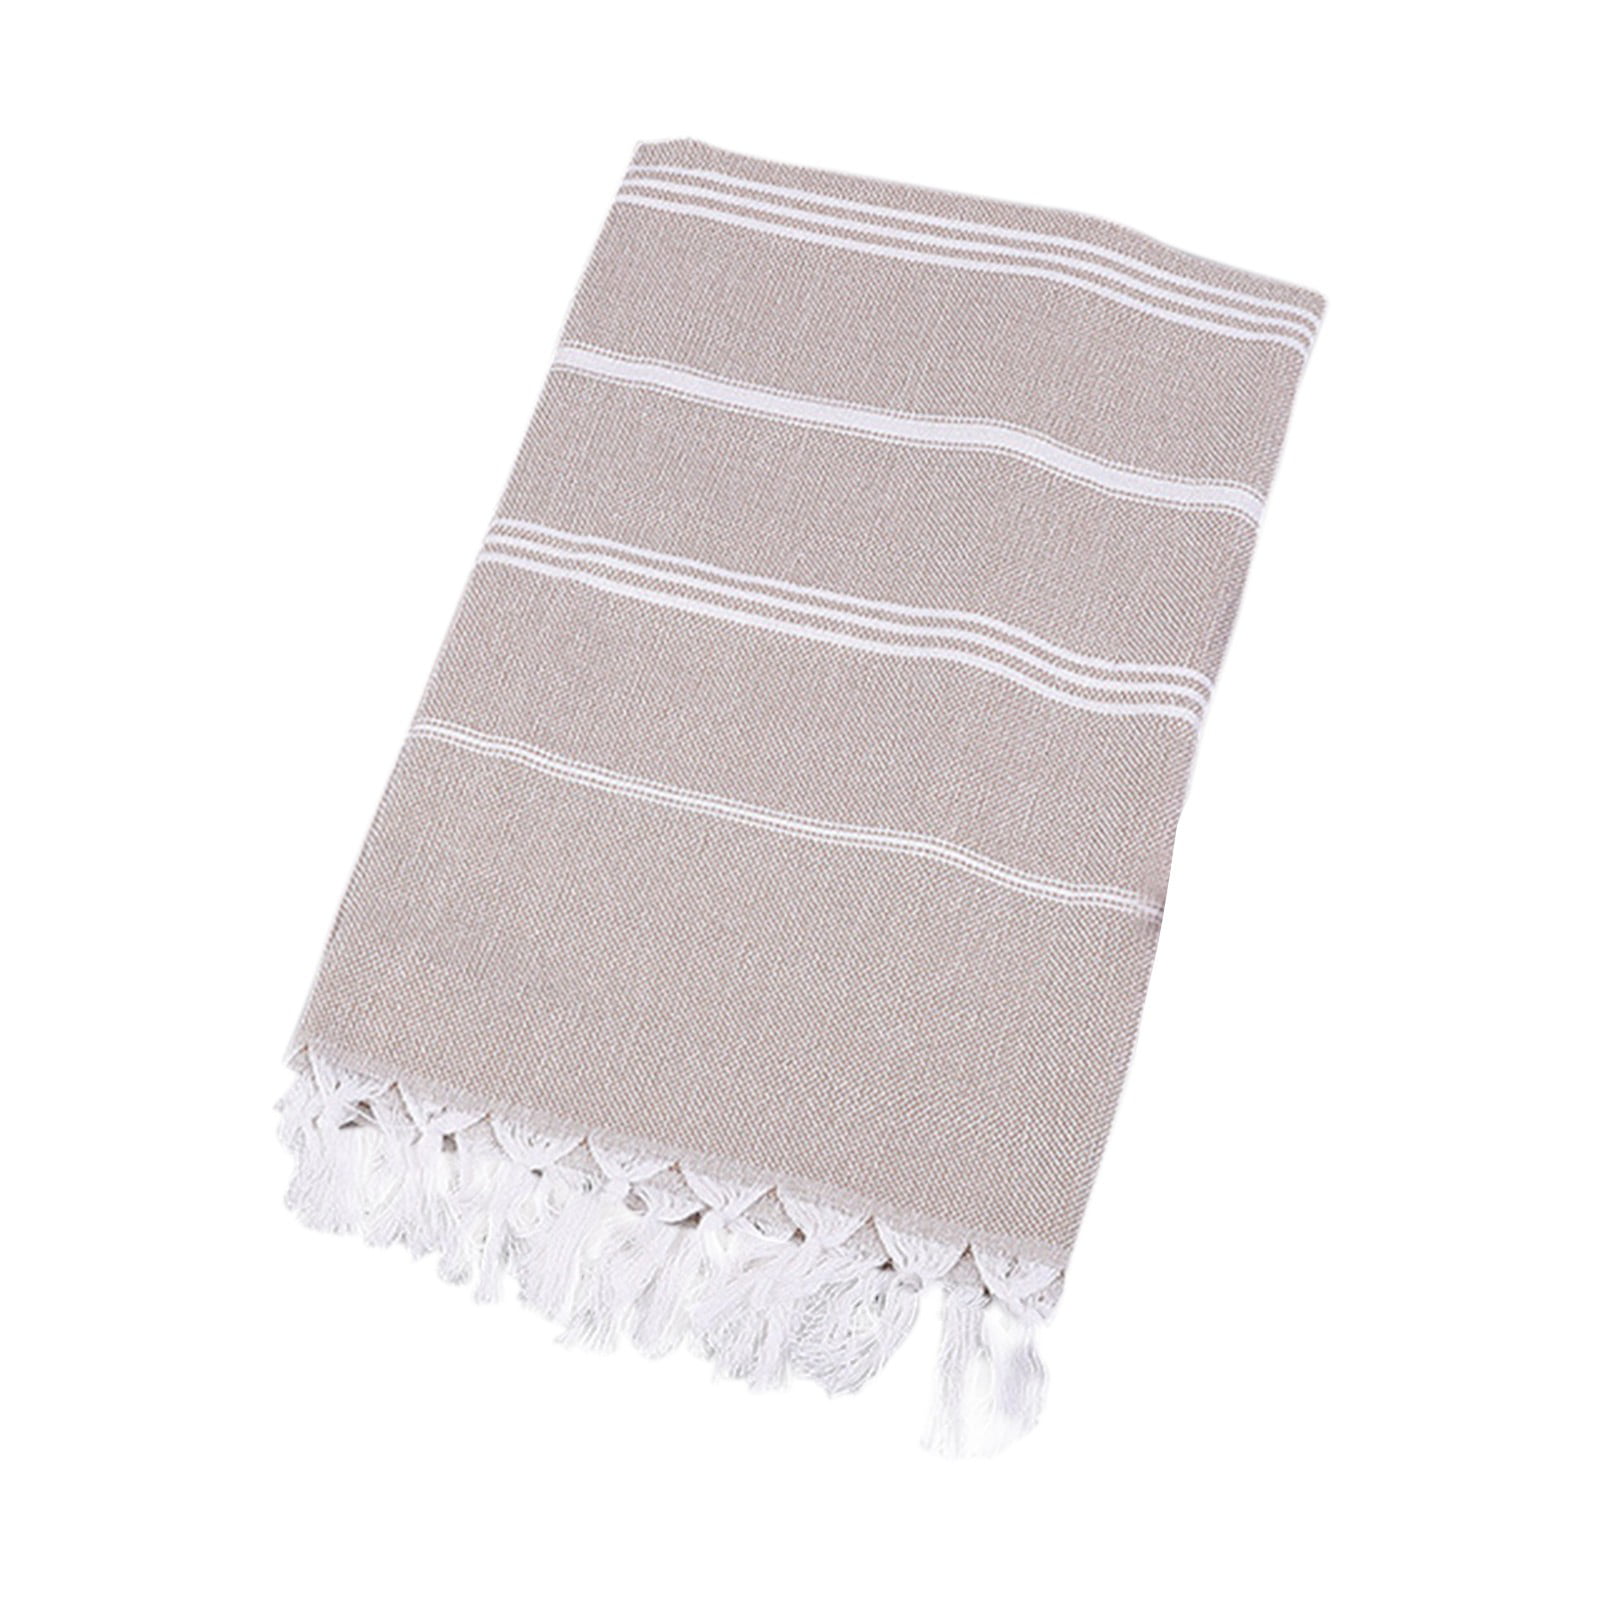 Sand Free 100% Turkish Cotton Beach Towel Blue & White stripes 63"x40" absorb 